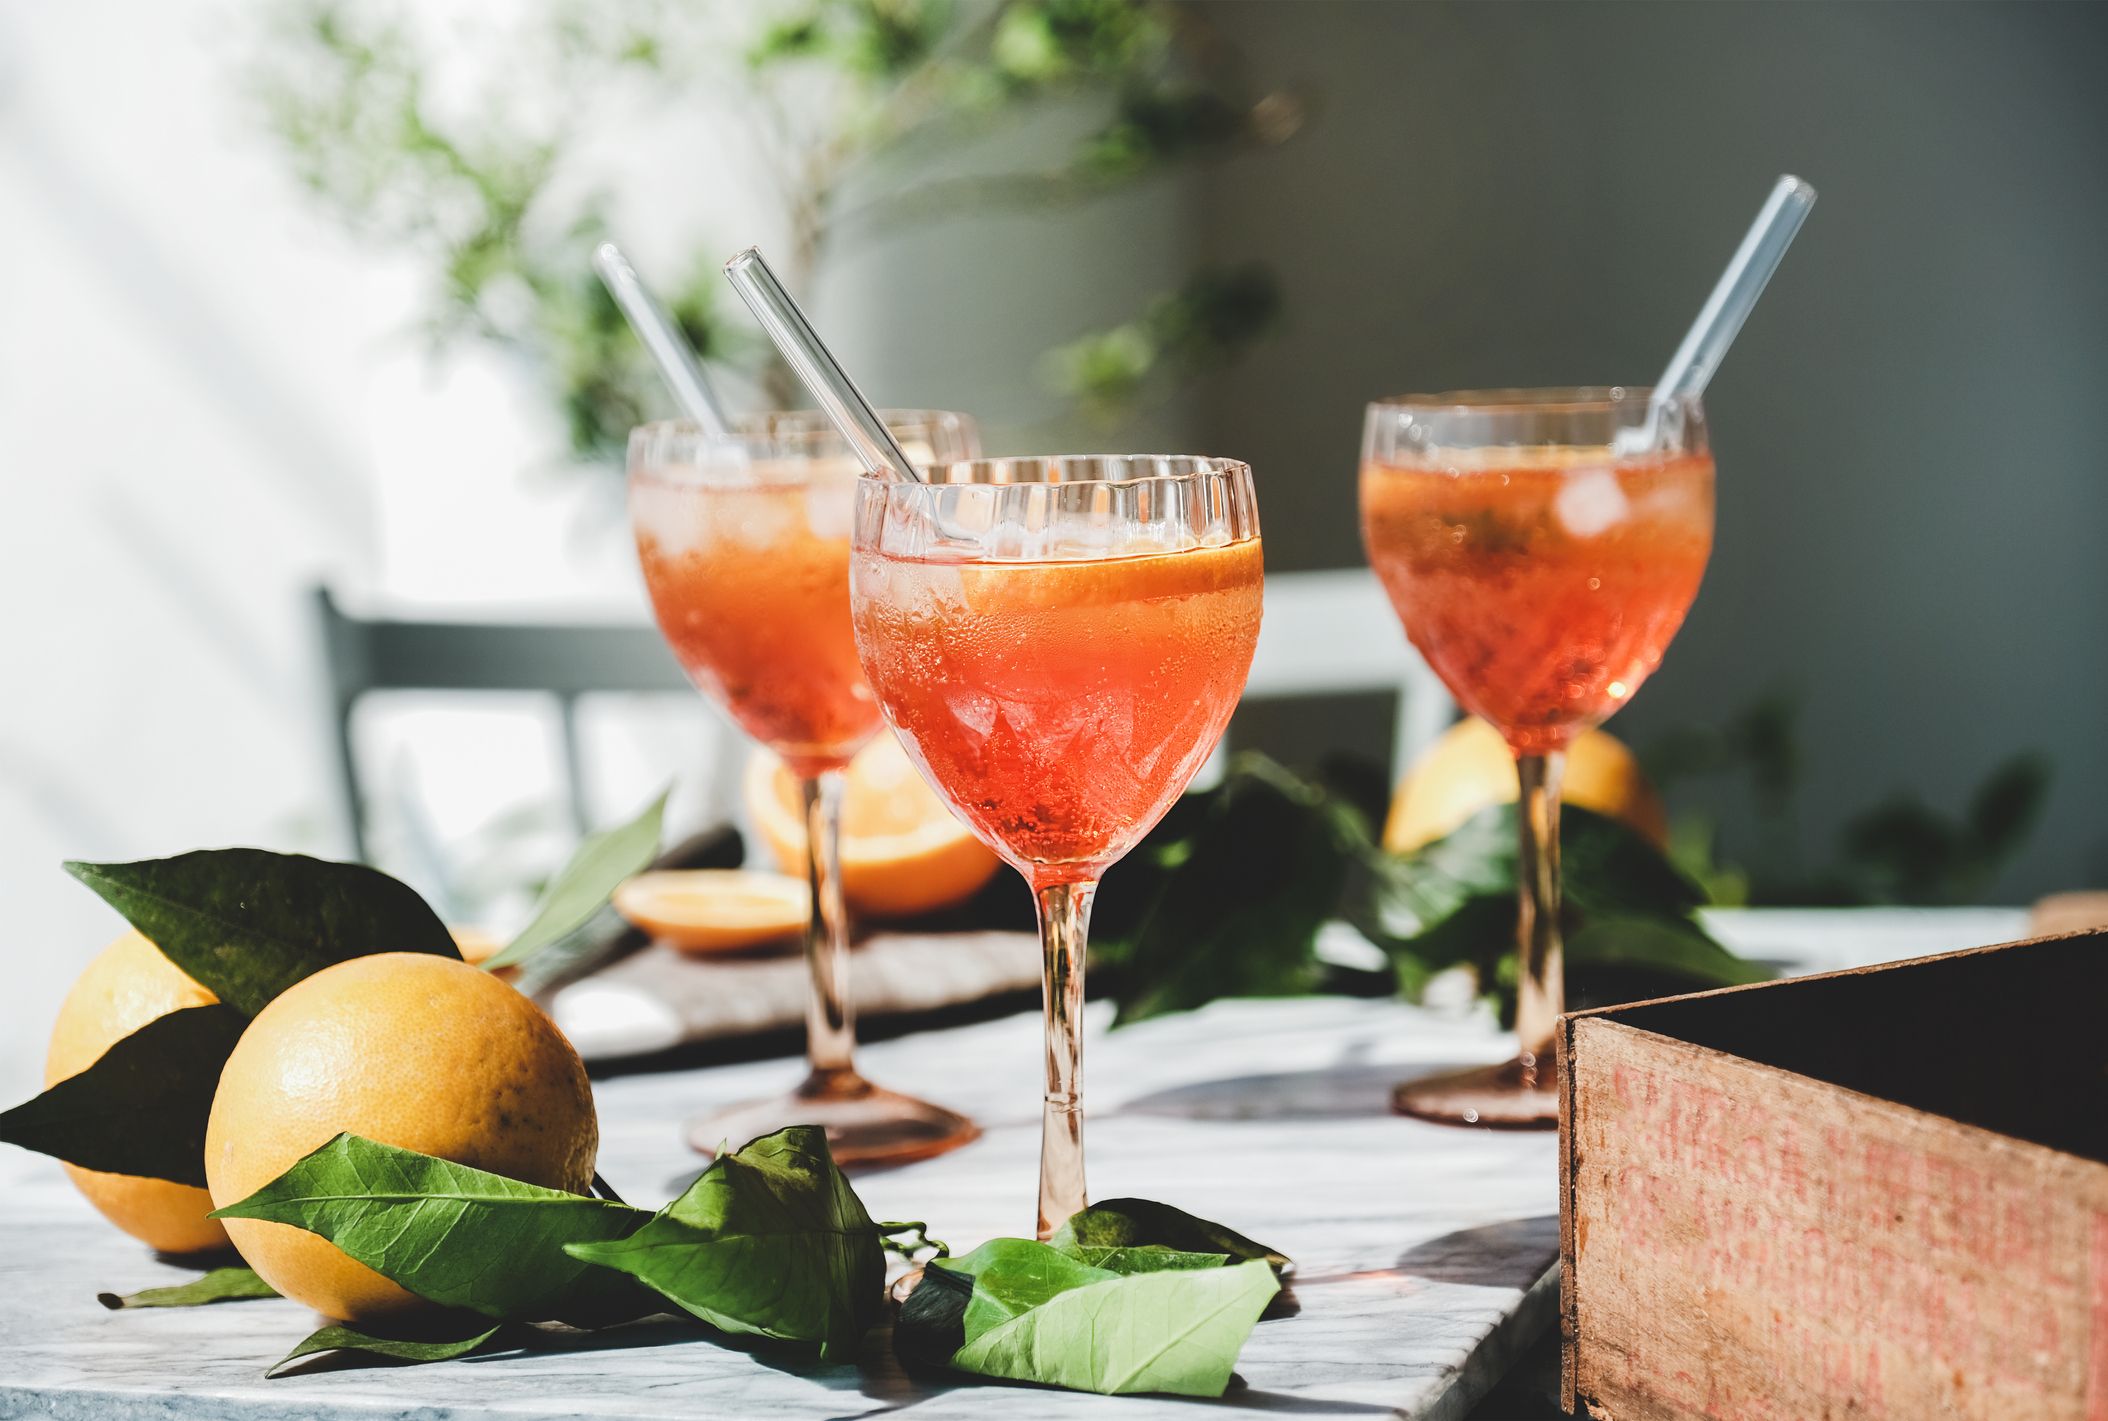 Lidl's bestselling orange Bitterol aperitivo is back for summer